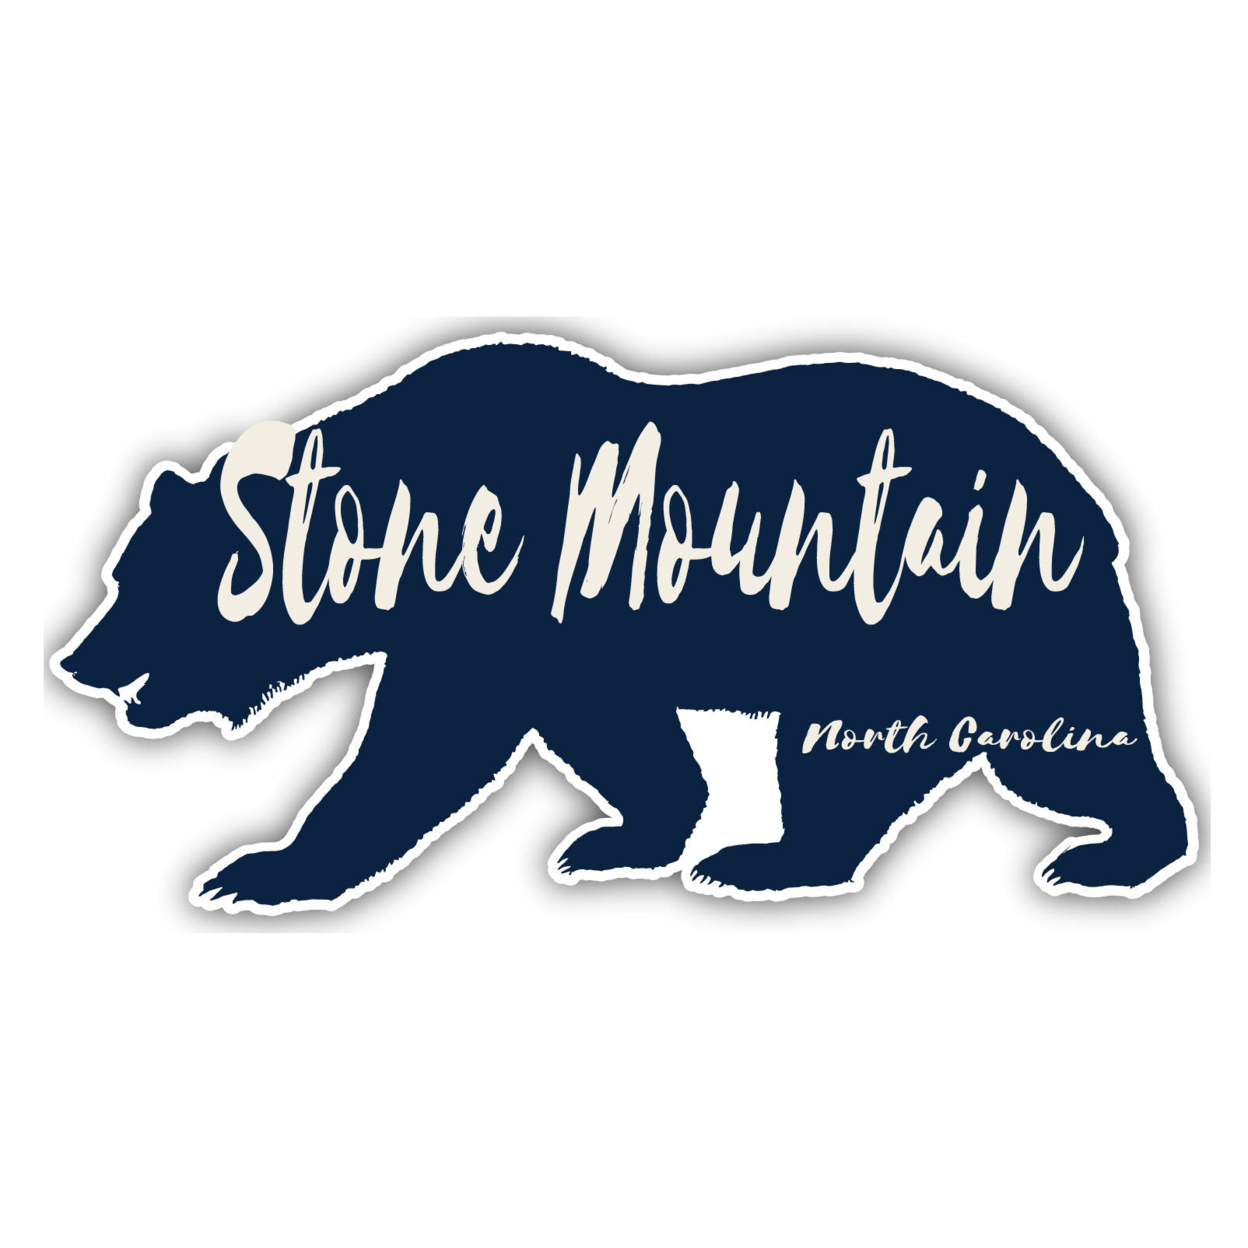 Stone Mountain North Carolina Souvenir Decorative Stickers (Choose Theme And Size) - Single Unit, 2-Inch, Bear